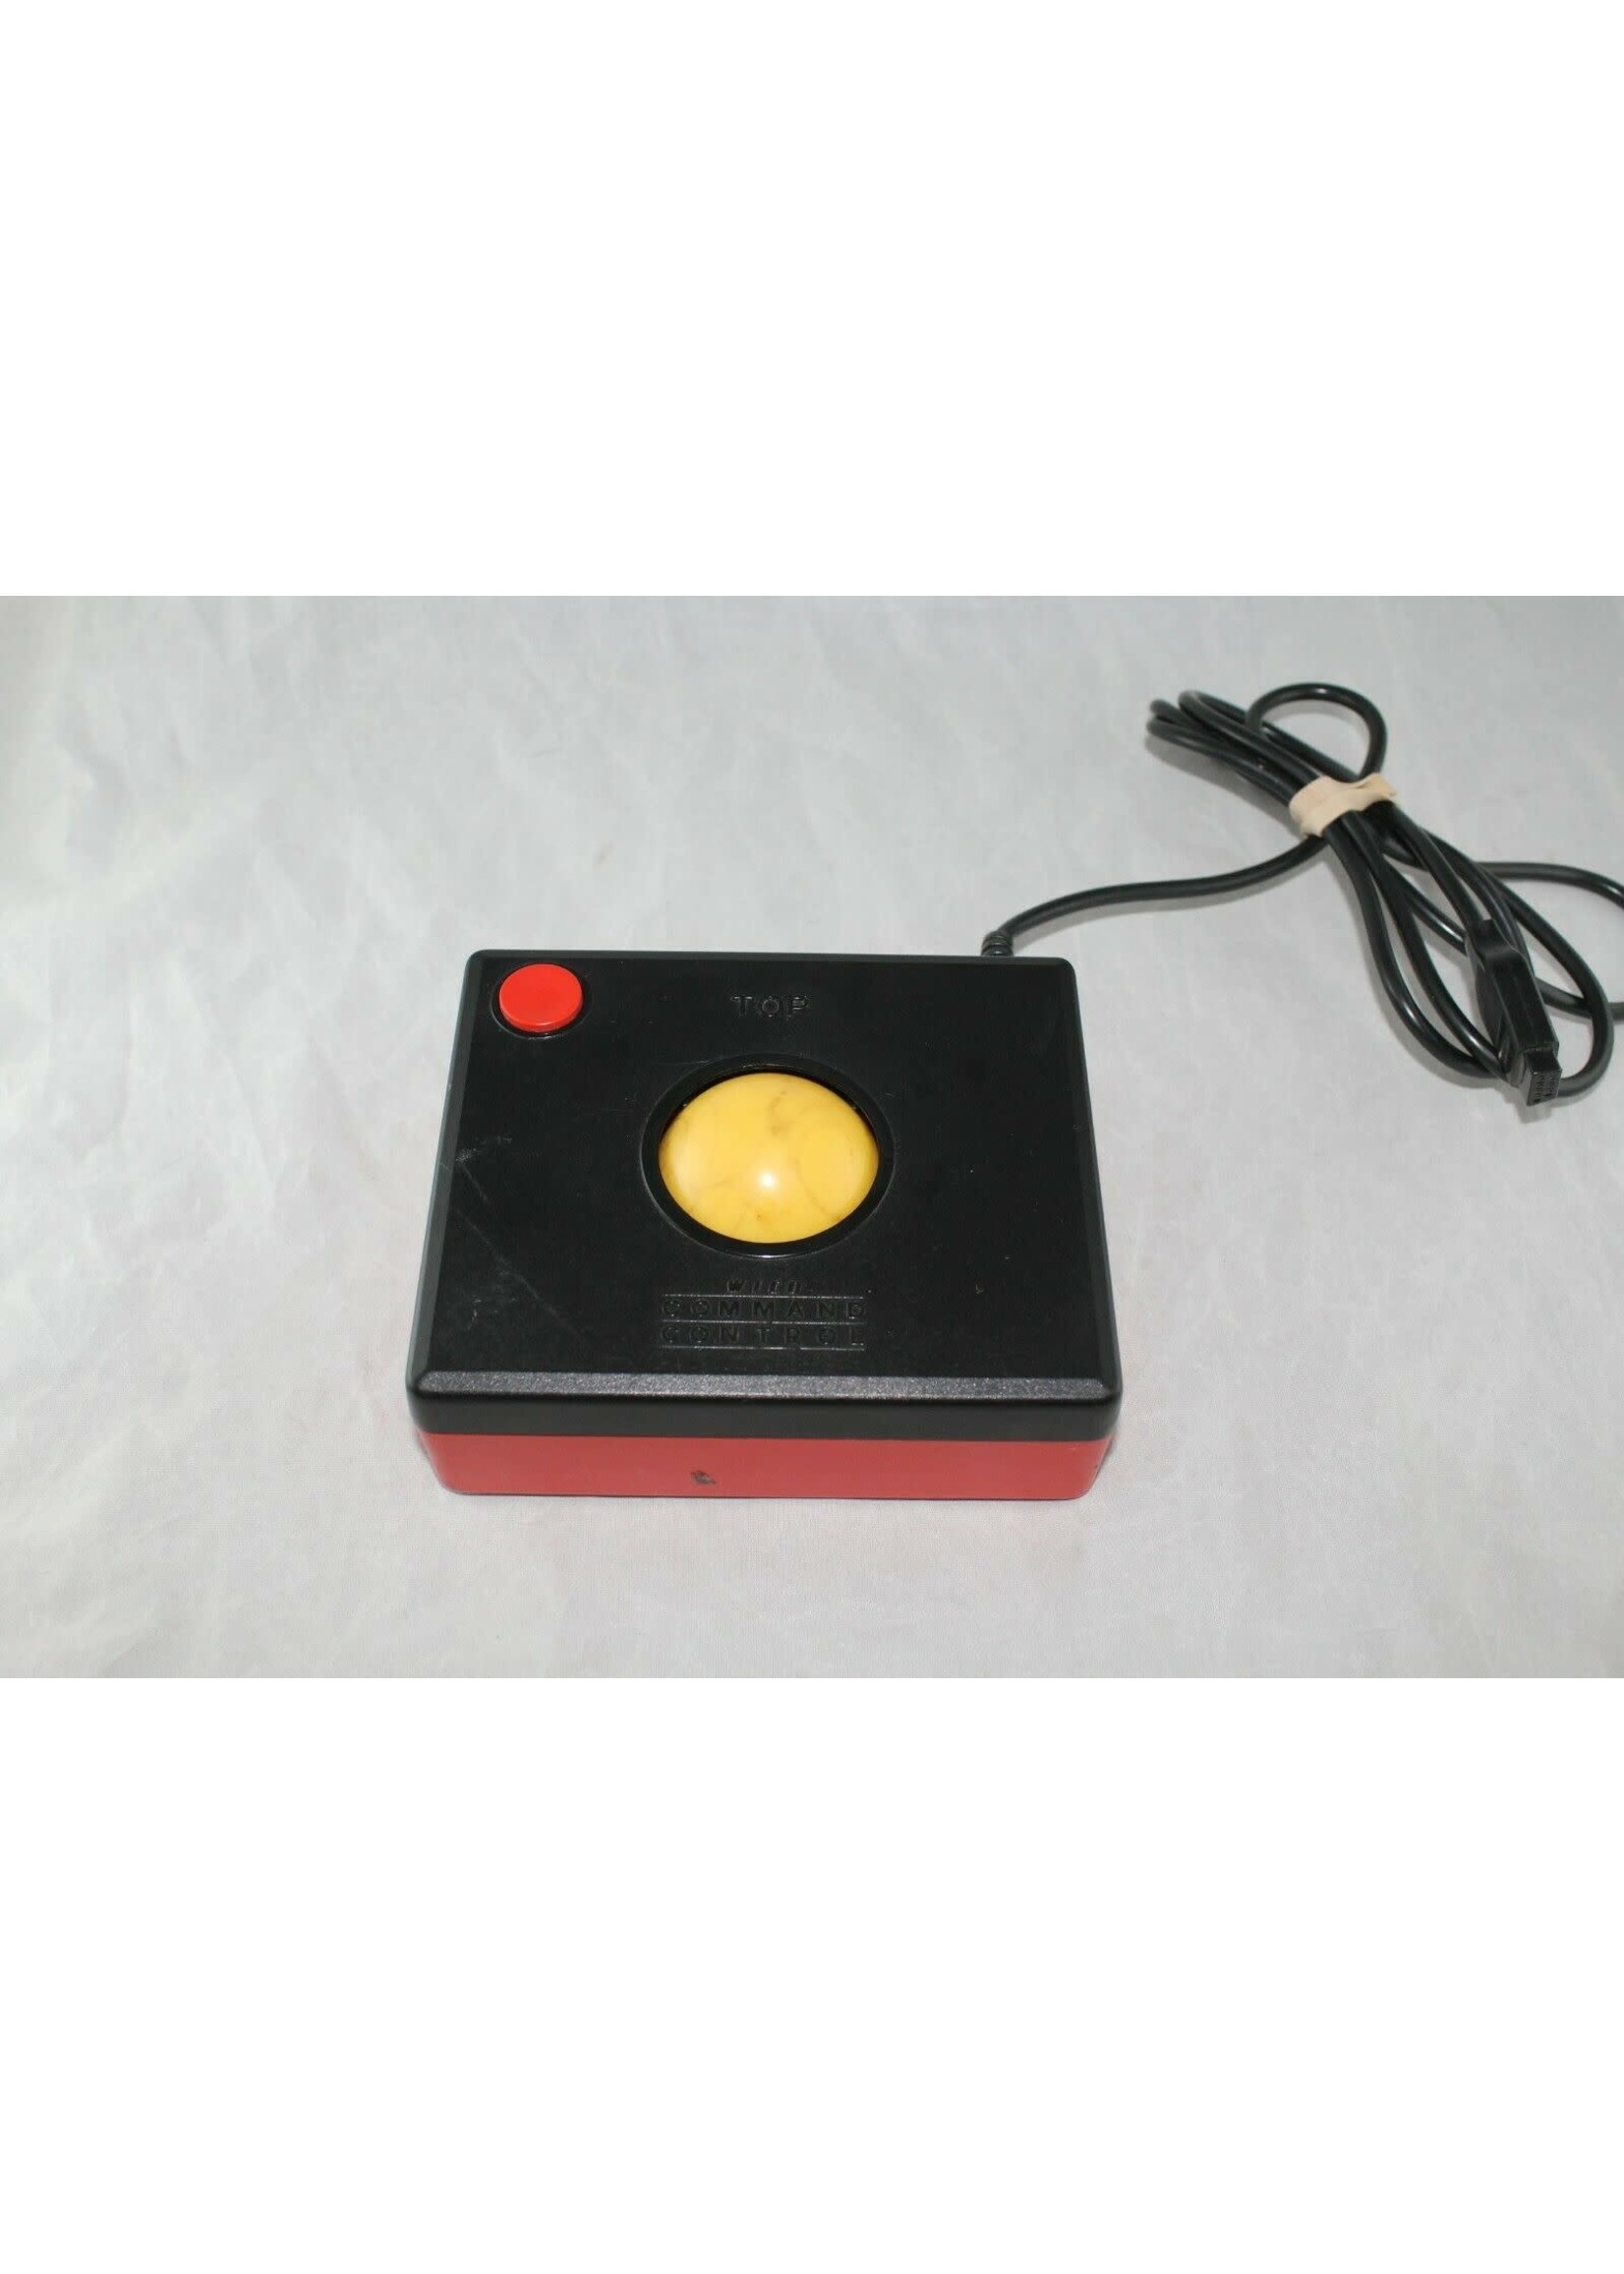 Wico Command Control Atari Trackball Sears Roebuck Model Controller